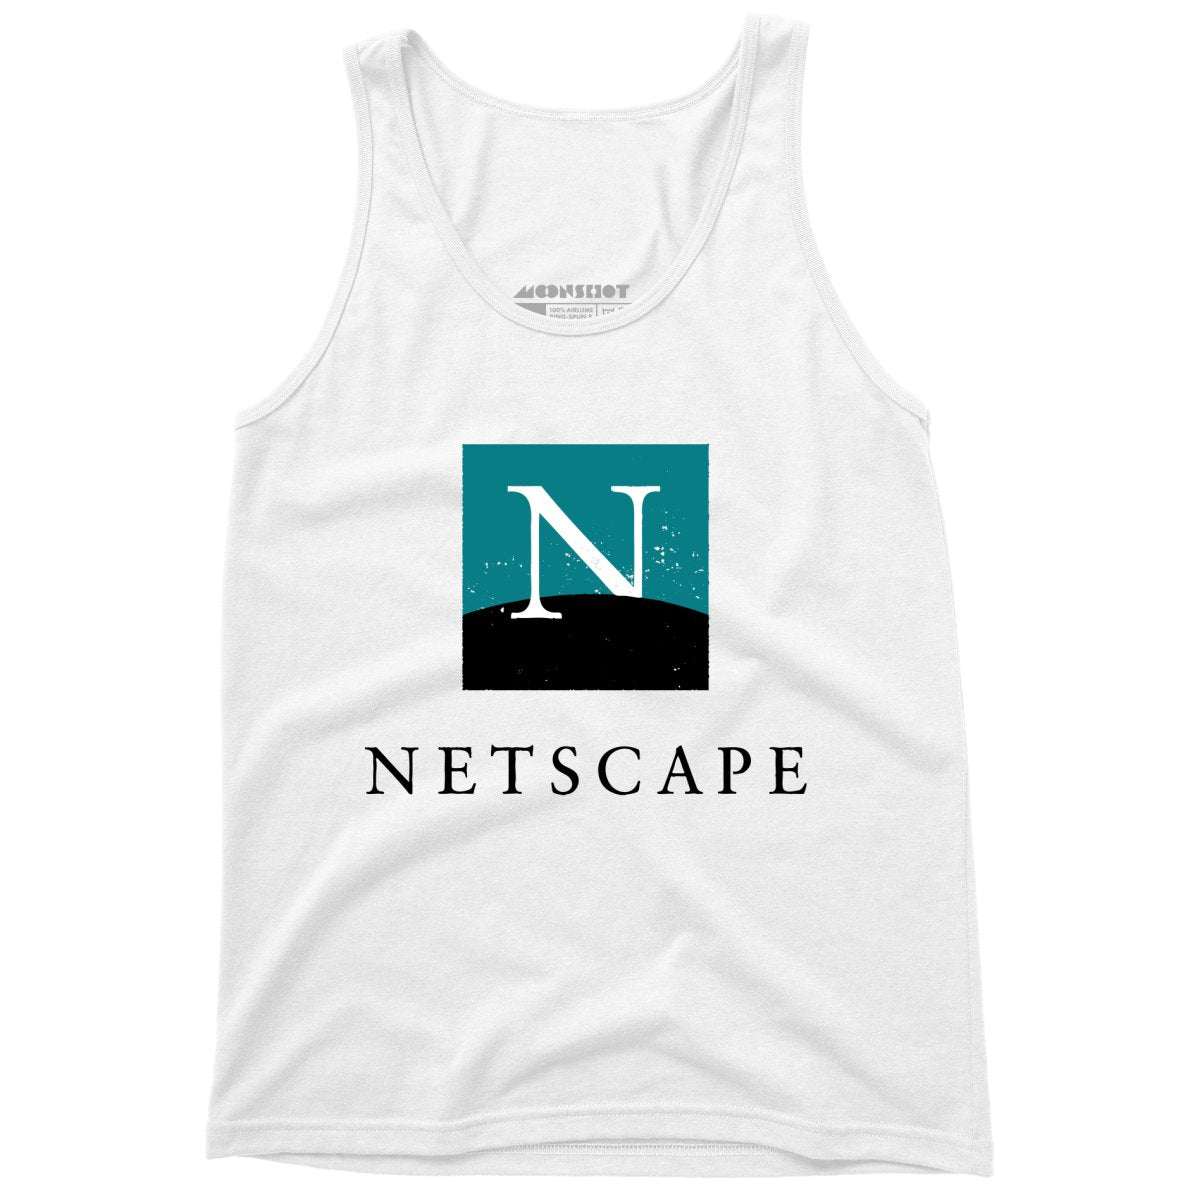 Netscape - Vintage Internet - Unisex Tank Top